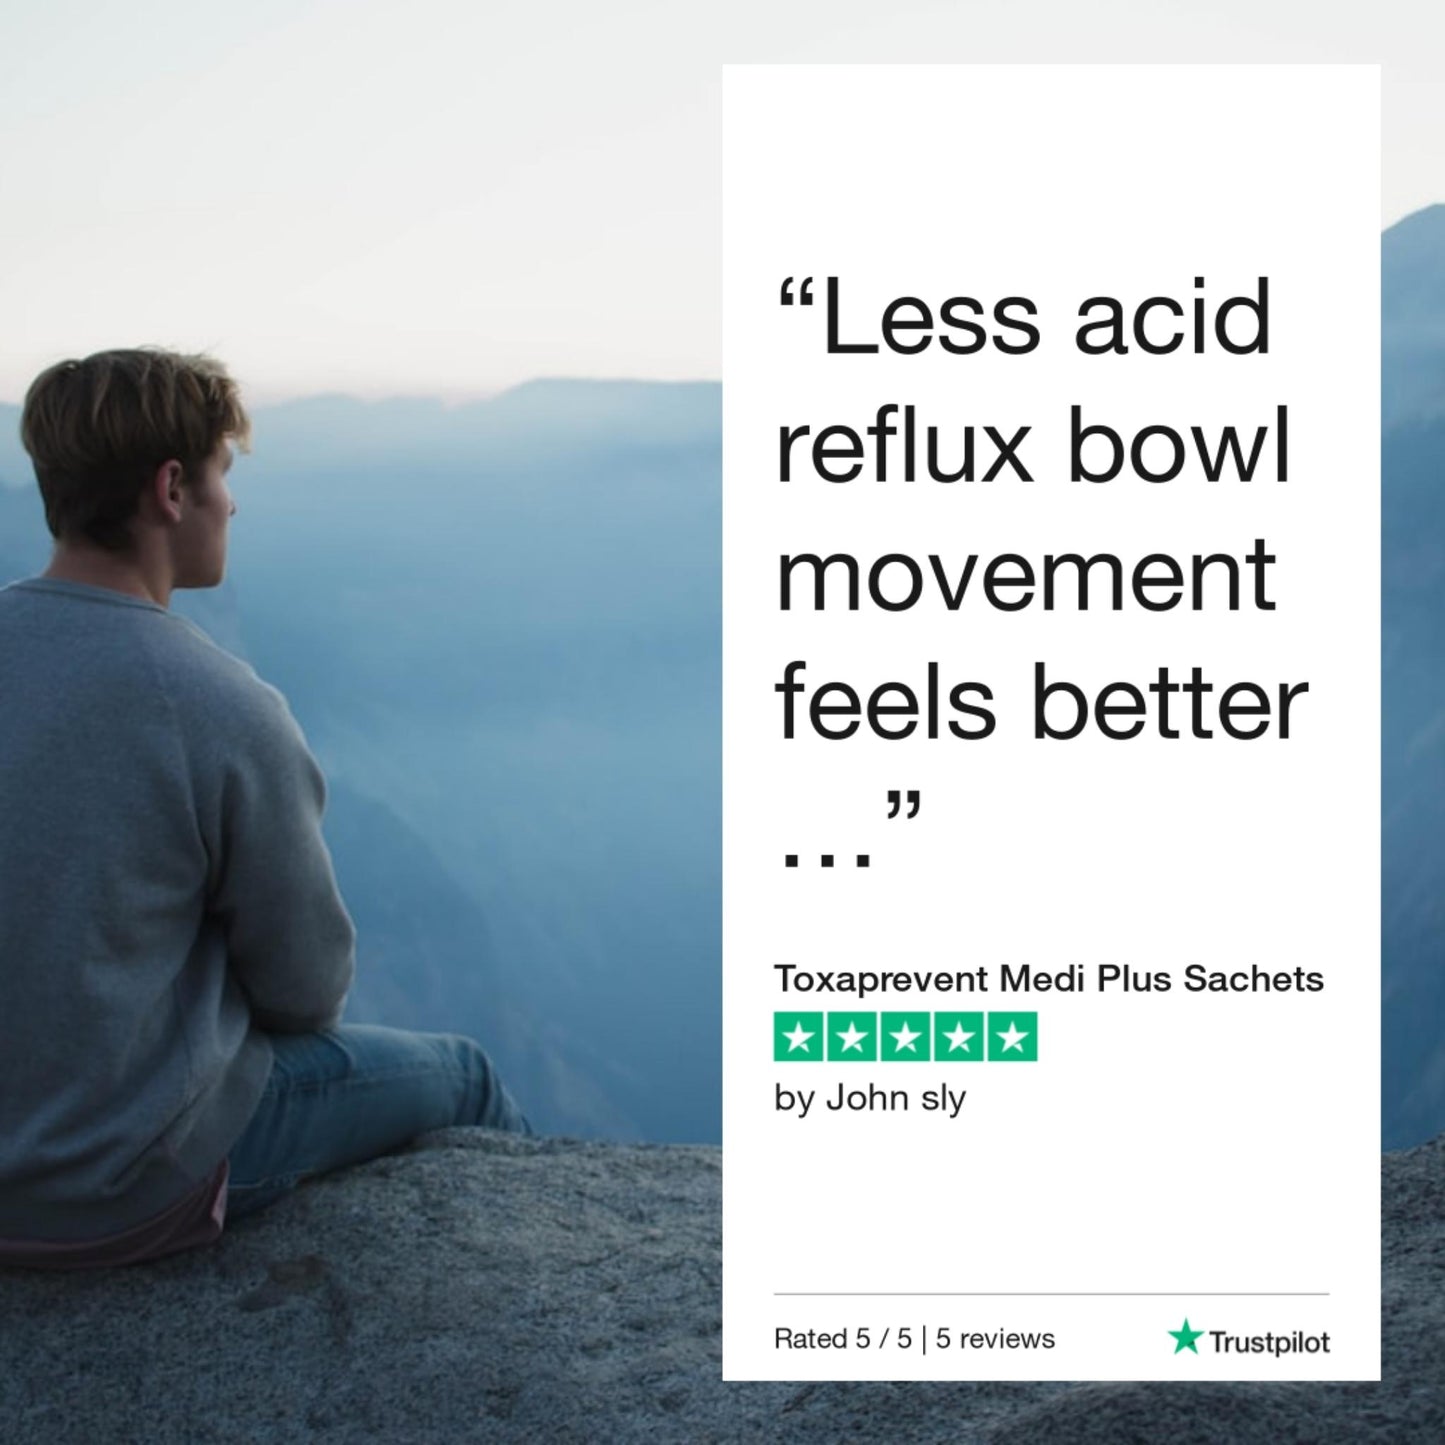 Acid Reflux Health Pack